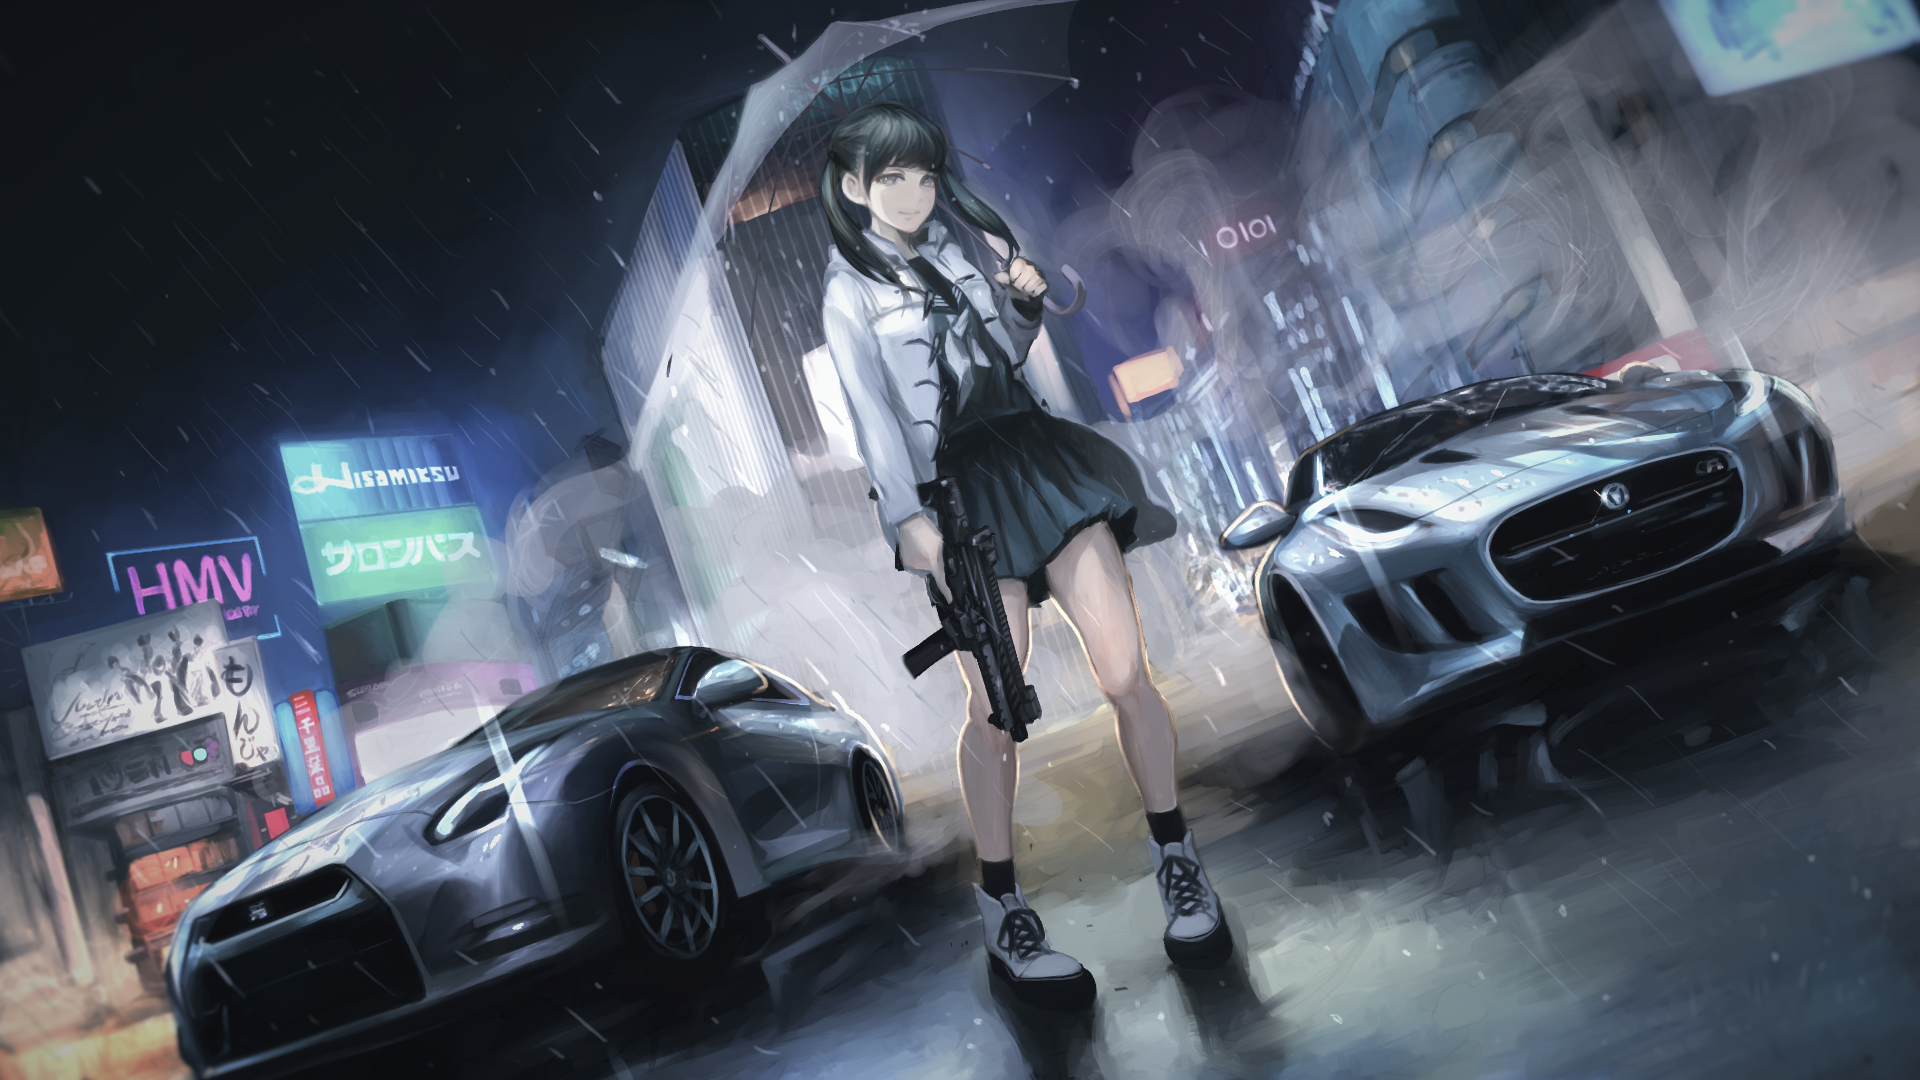 #original characters, #anime girls, #umbrella, #car